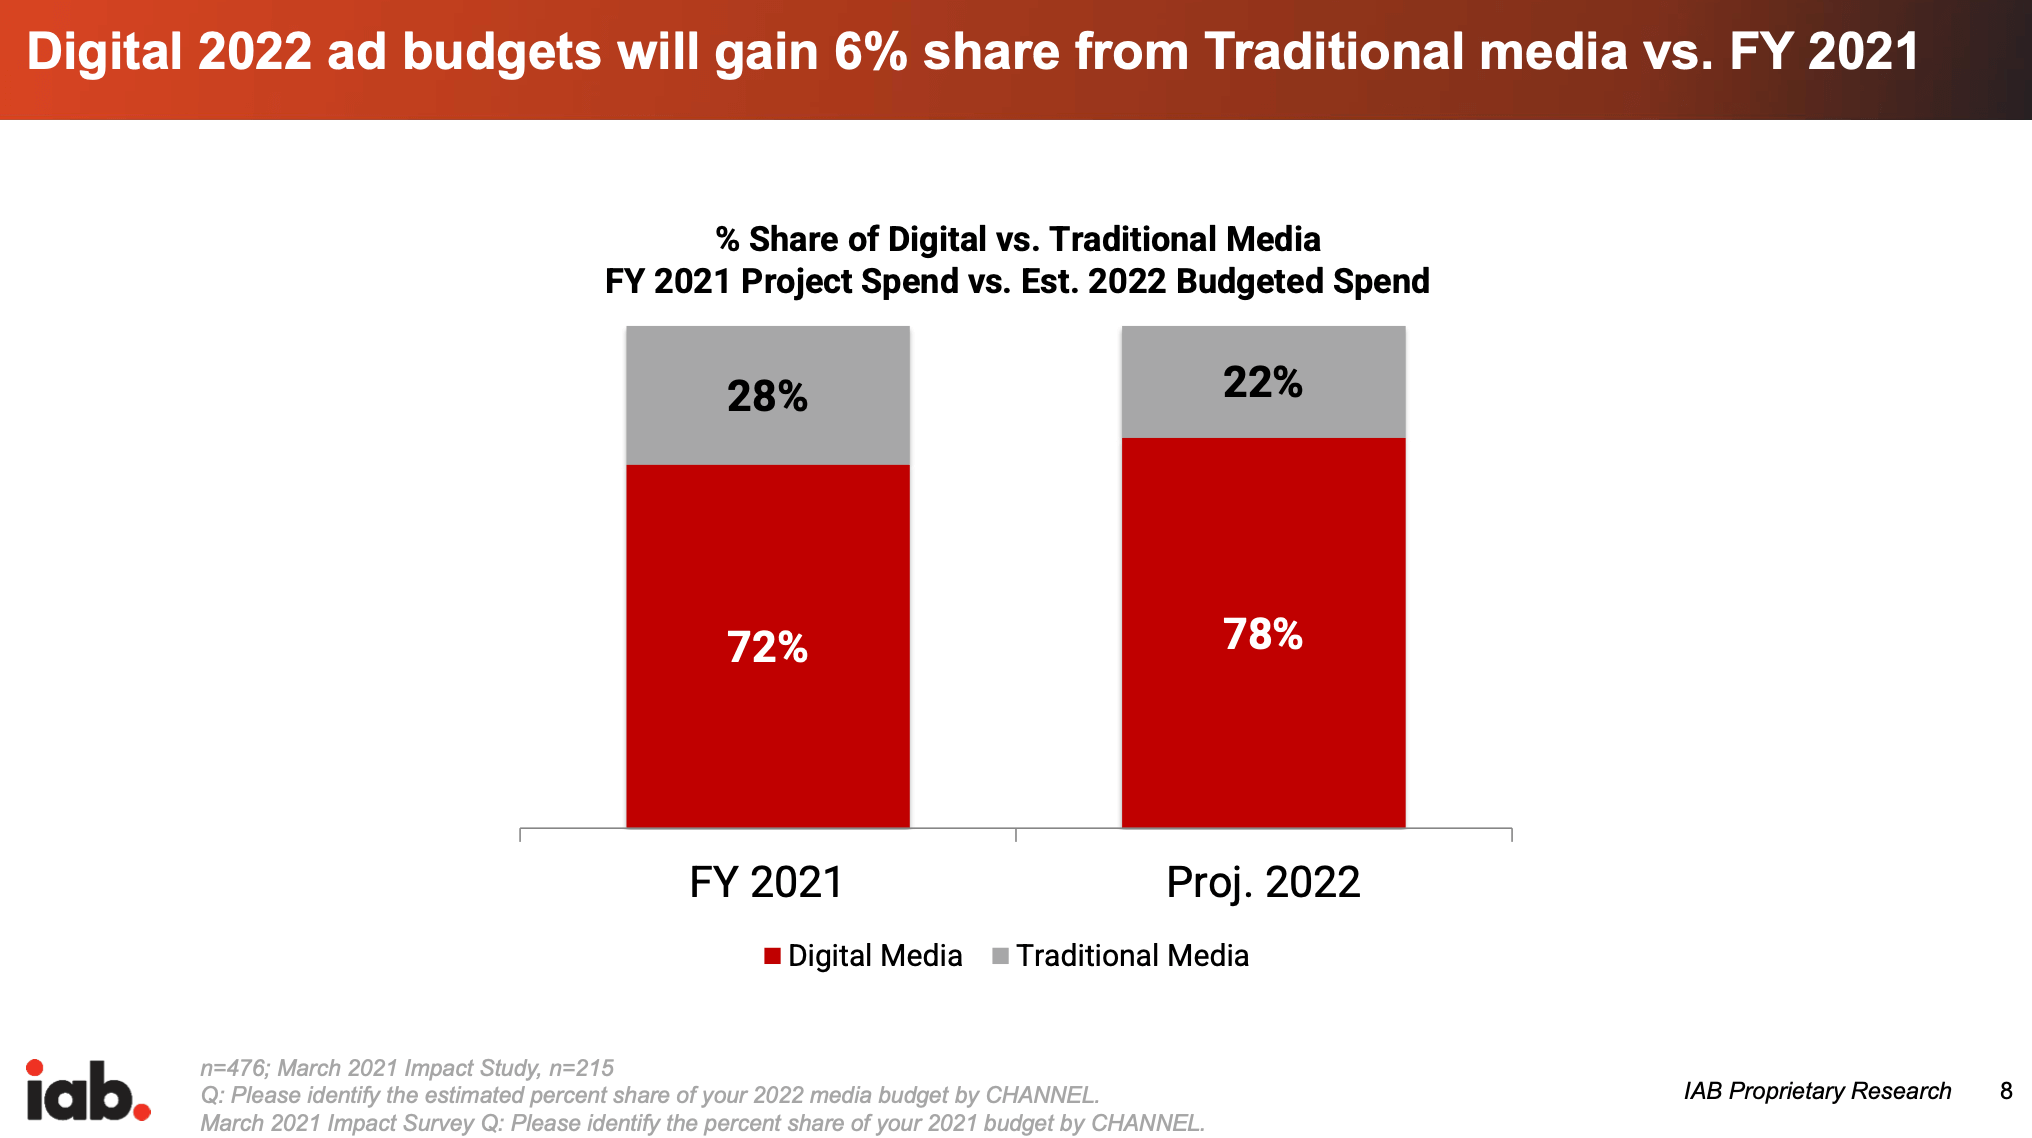 Importance of digital media in 2022